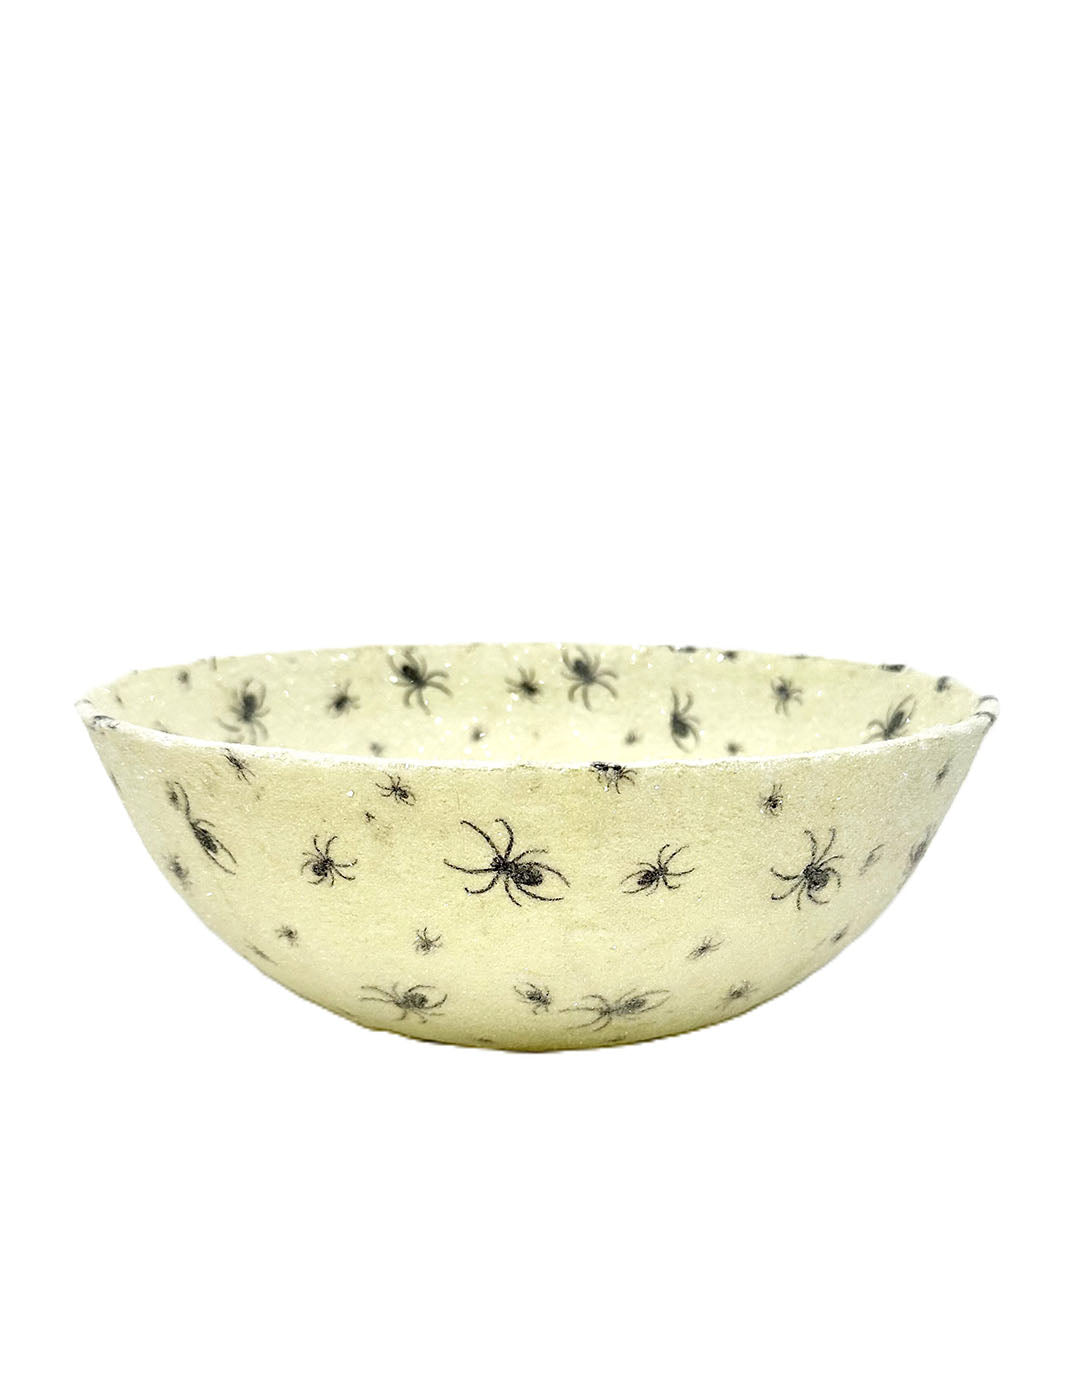 Spider Decoupage Bowl - Cream & Black